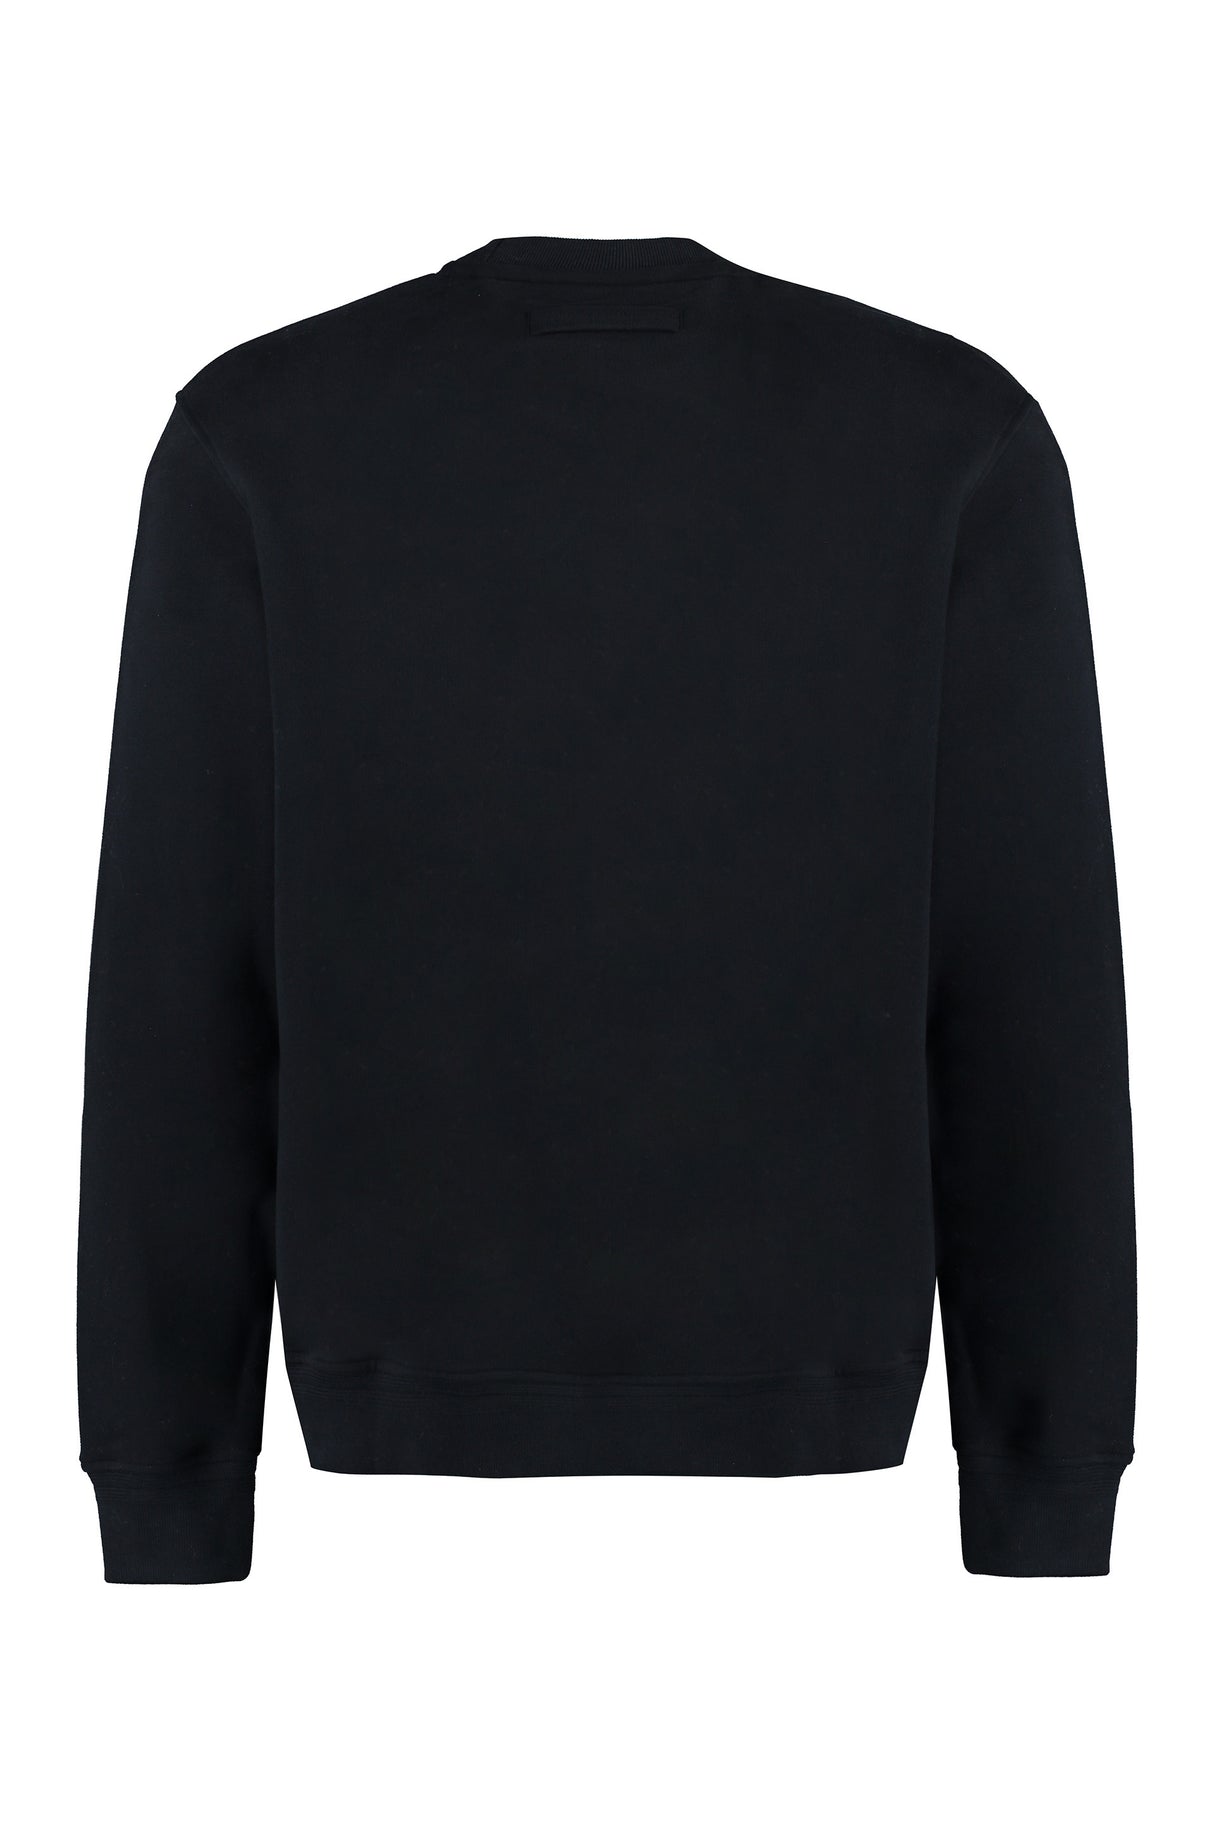 ZEGNA Men's Black Crew Neck Sweatshirt - FW23 Collection